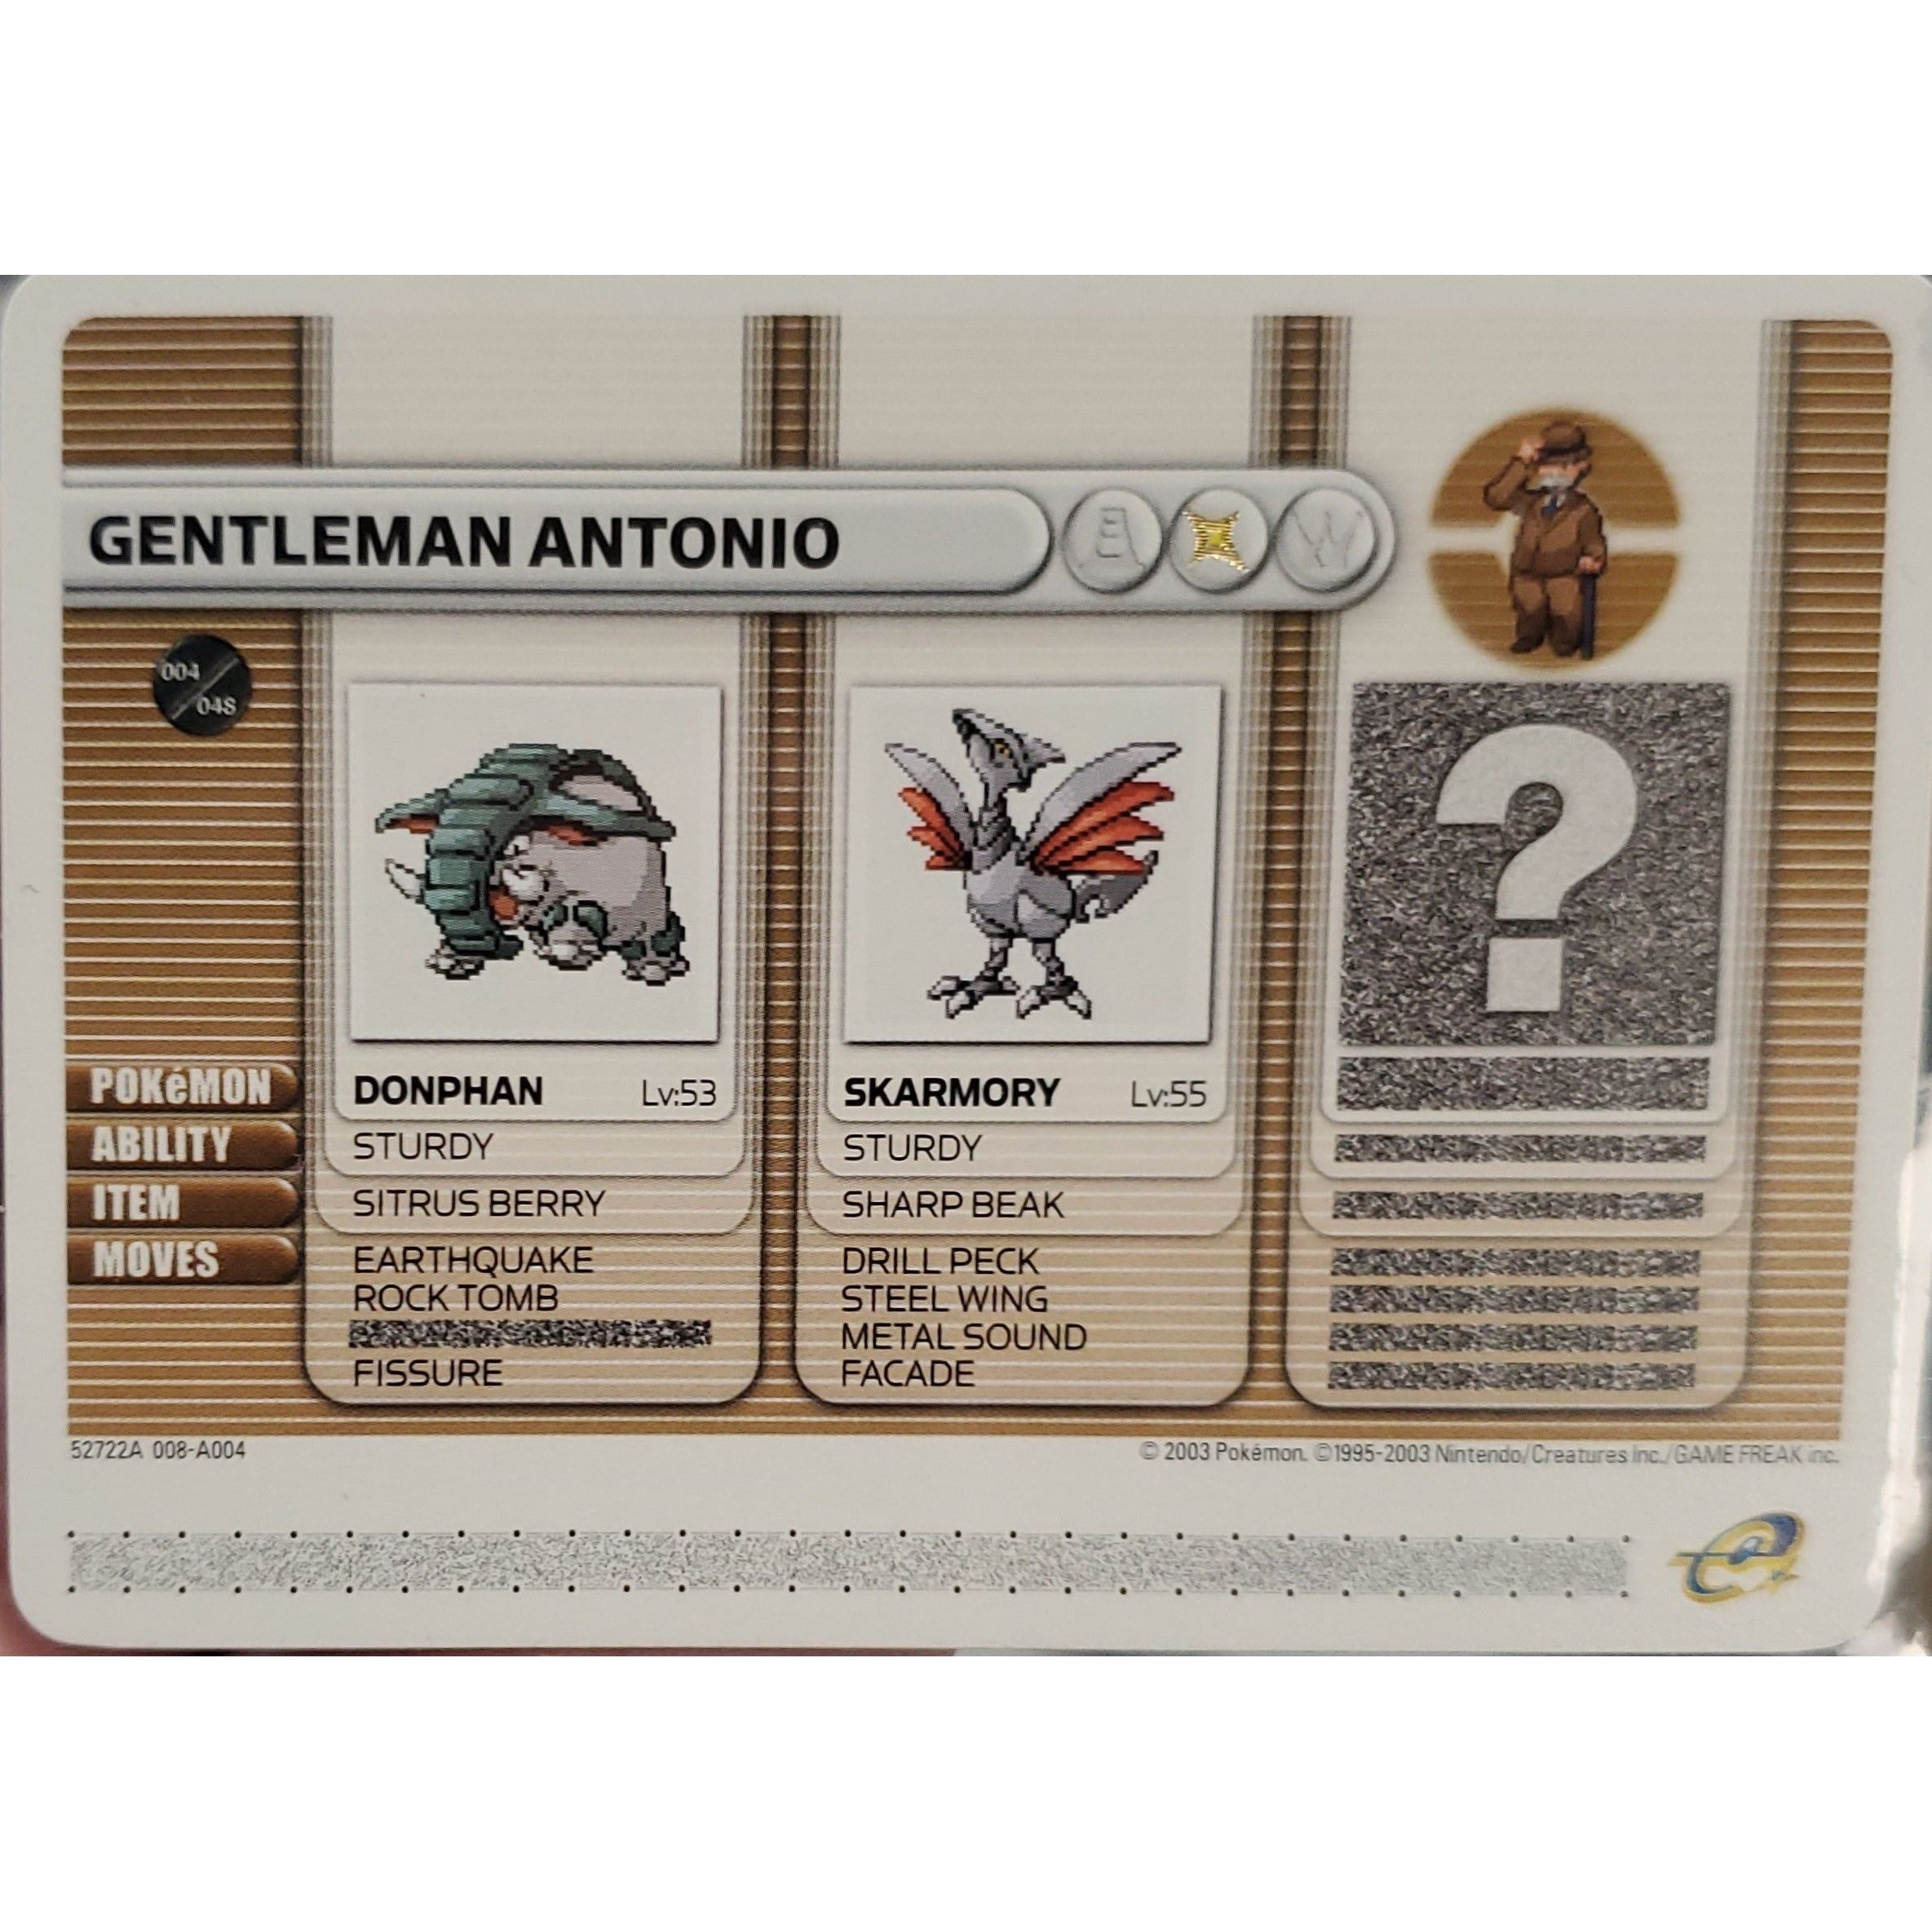 GBA - Pokemon Battle Card - Gentleman Antonio